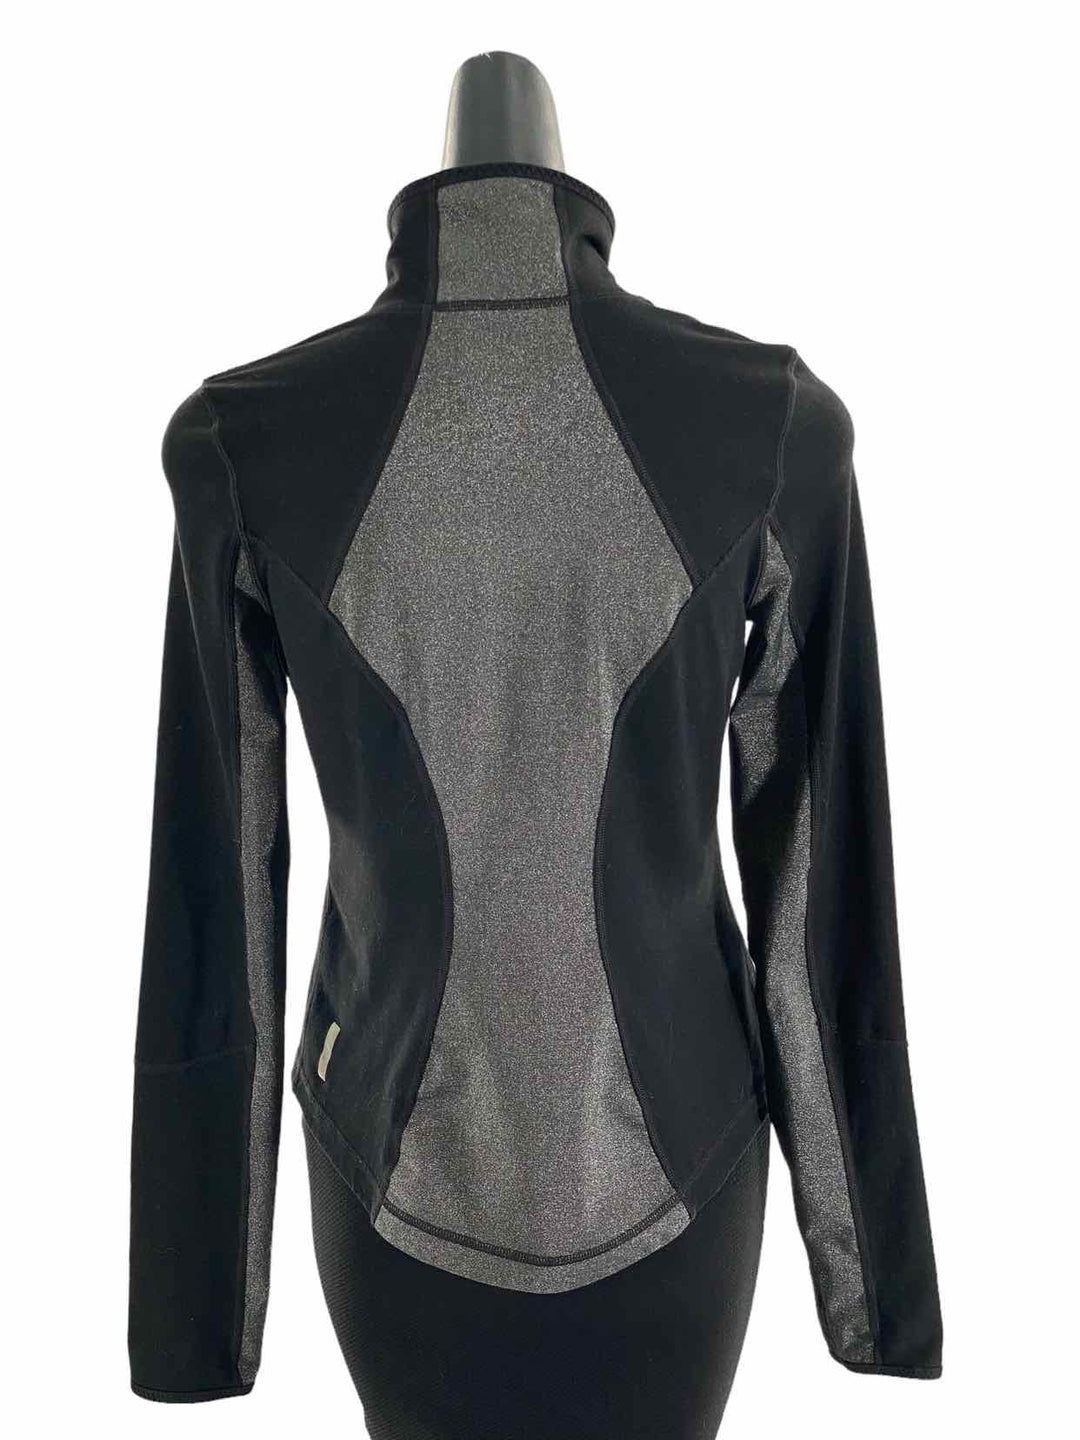 Zella Size M Black Grey Athletic Jacket